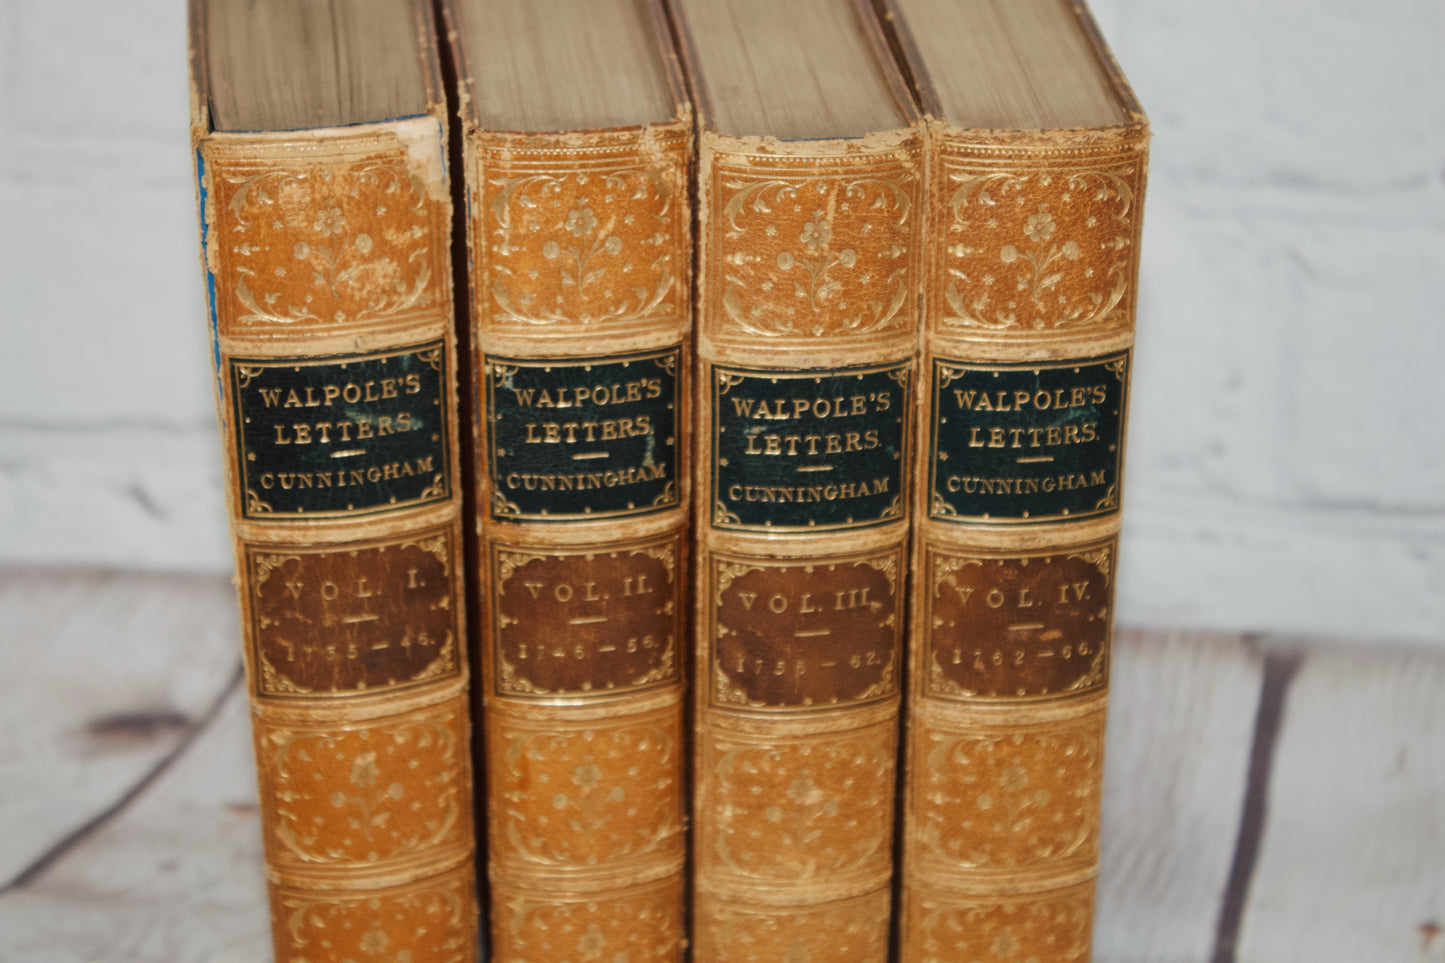 1857 Walpole's Four Volume Book Set